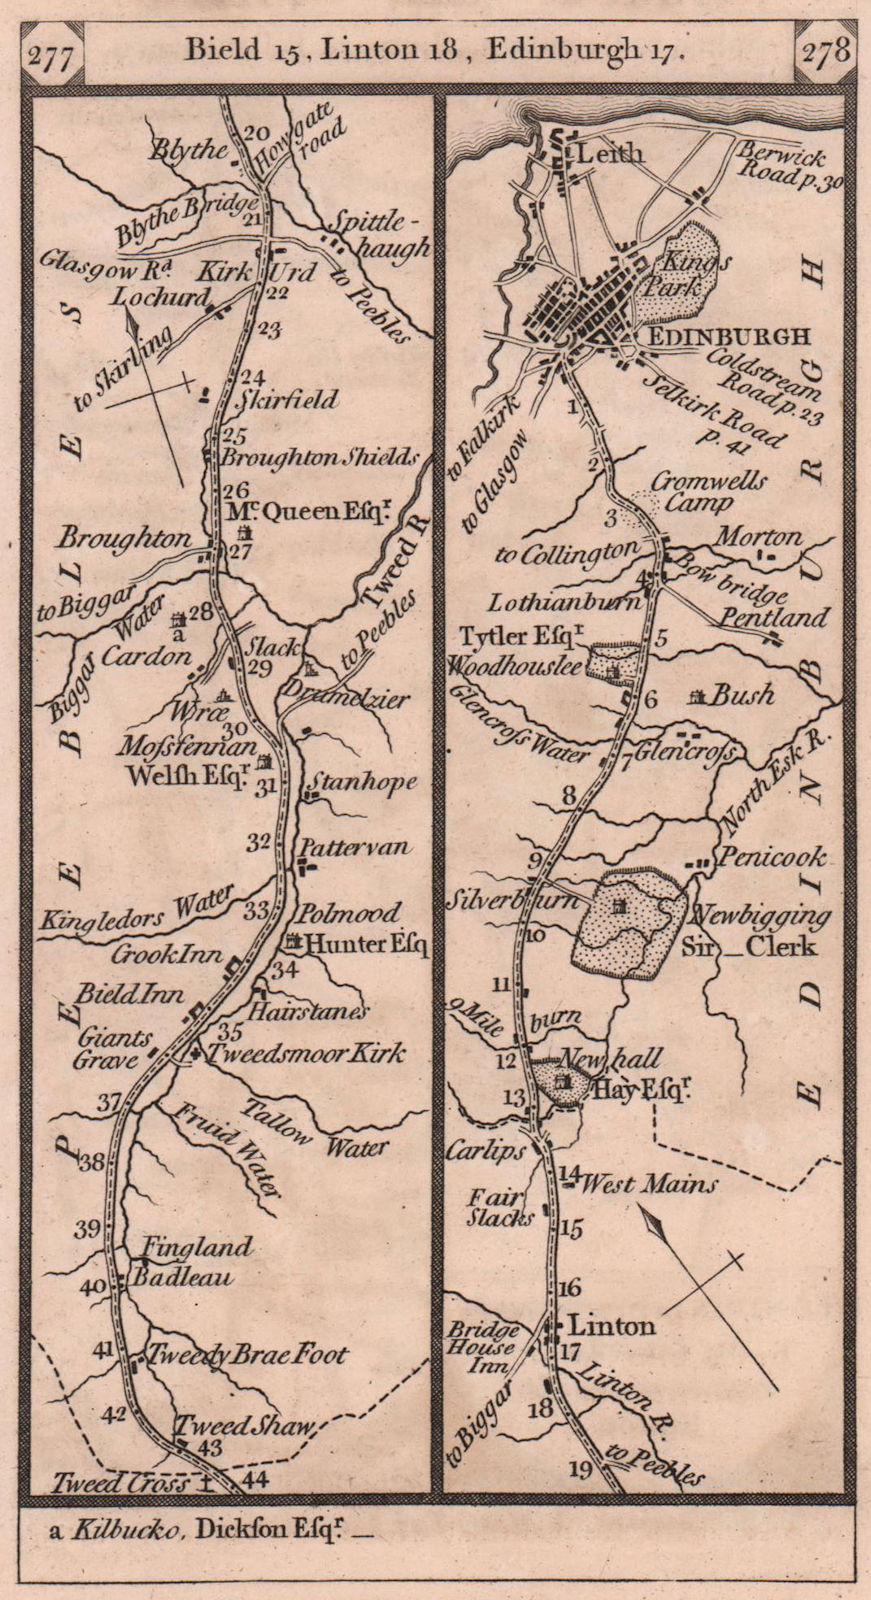 Associate Product Linton - Edinburgh road strip map PATERSON 1803 old antique plan chart